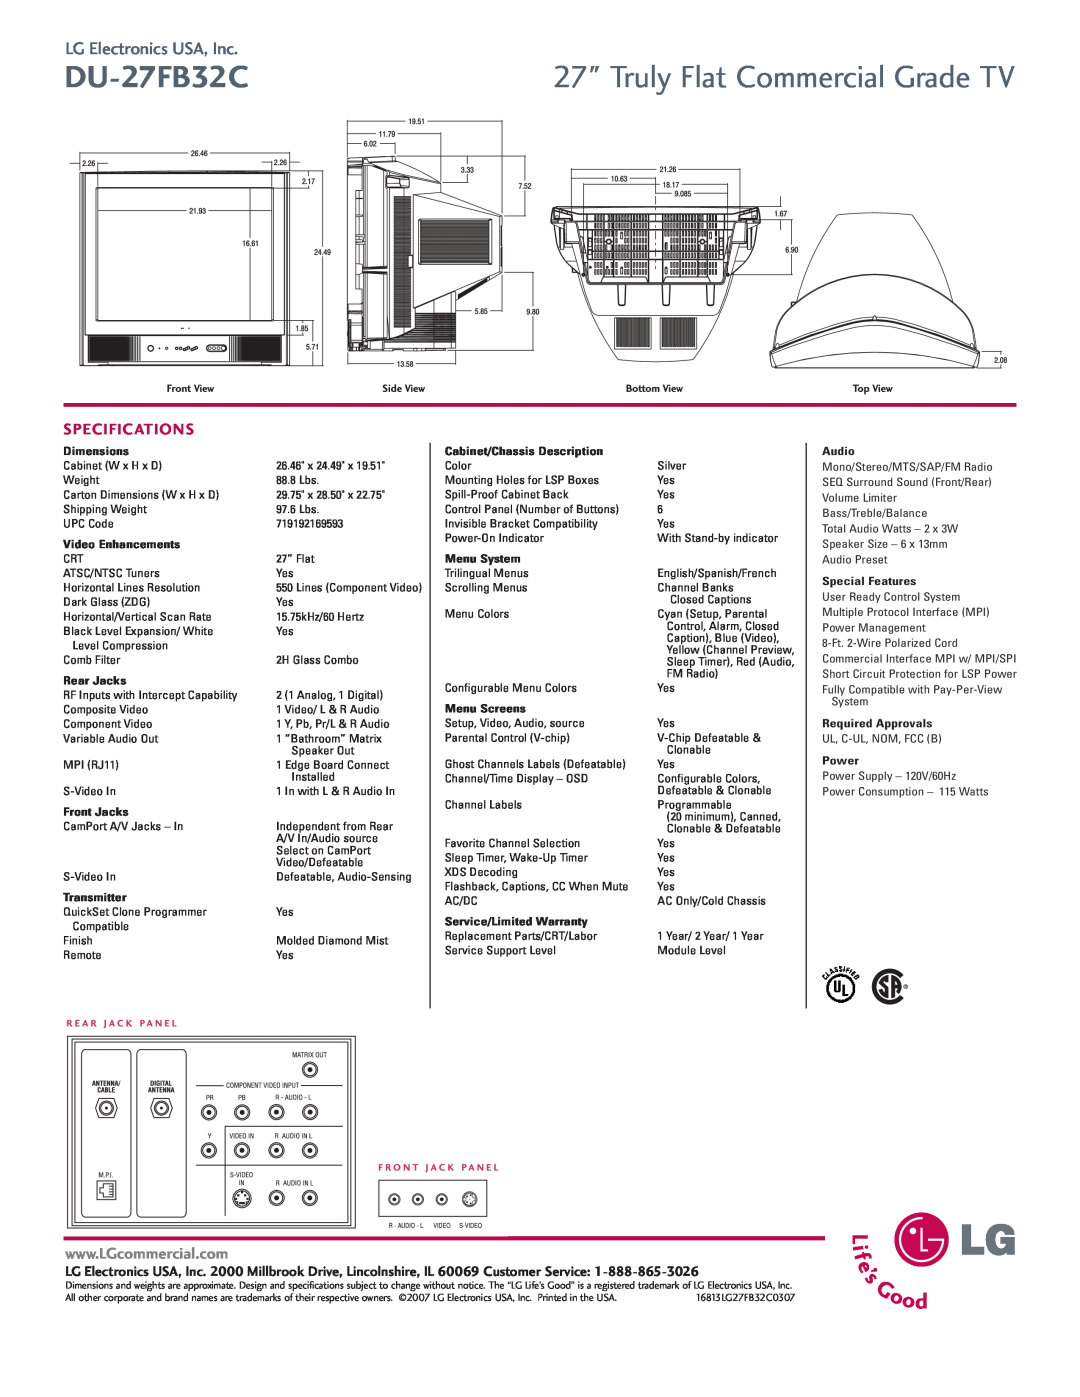 LG Electronics DU-27FB32C manual Truly Flat Commercial Grade TV, LG Electronics USA, Inc, Specifications 